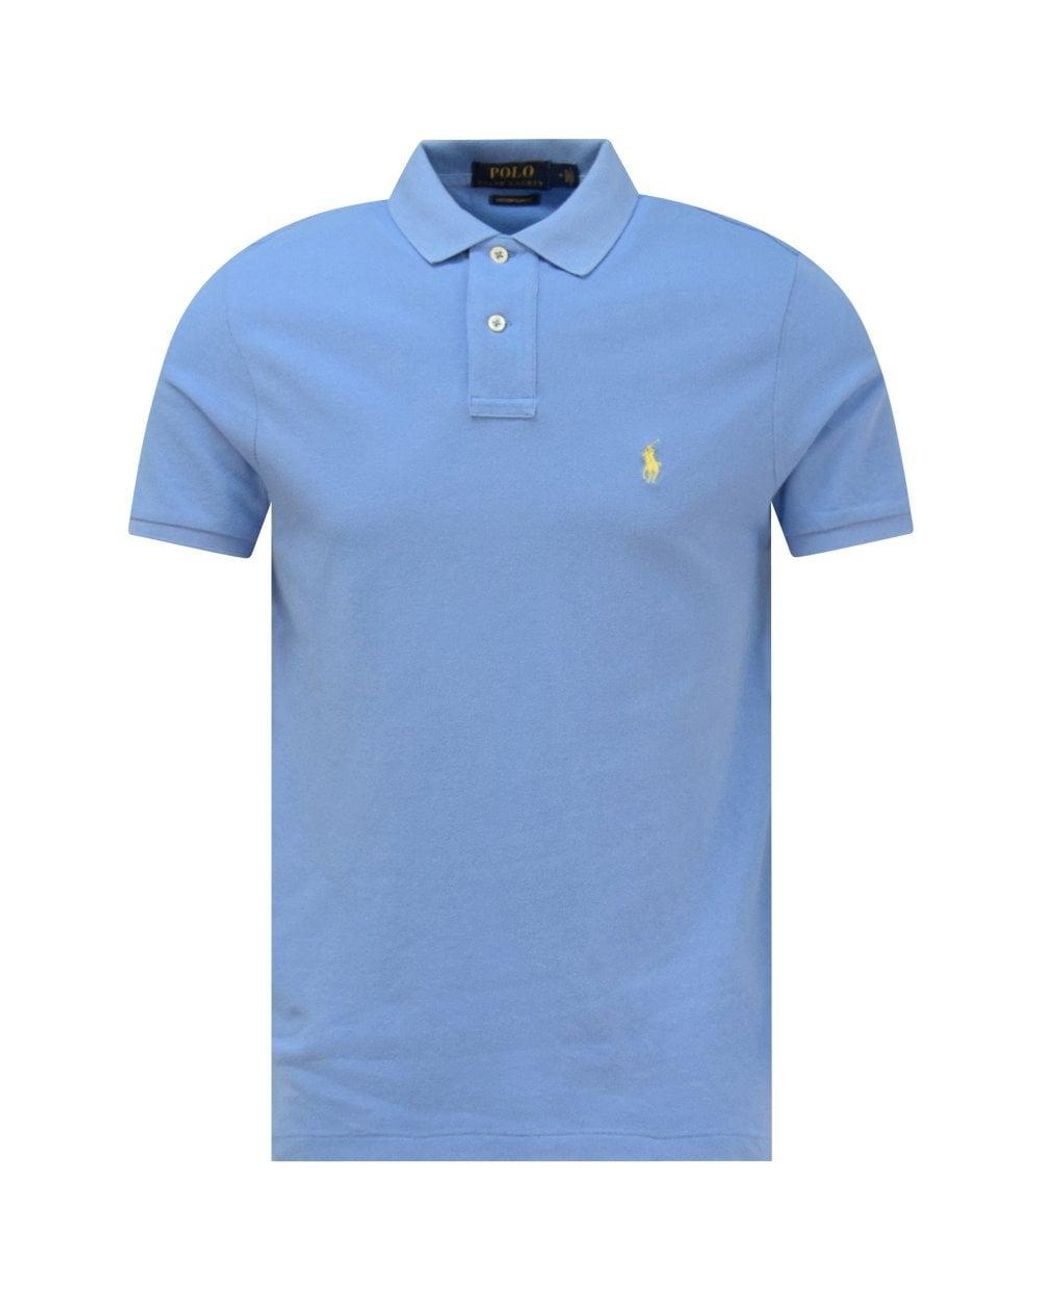 Polo Ralph Lauren Cotton Blue Polo Player Polo Shirt for Men - Lyst